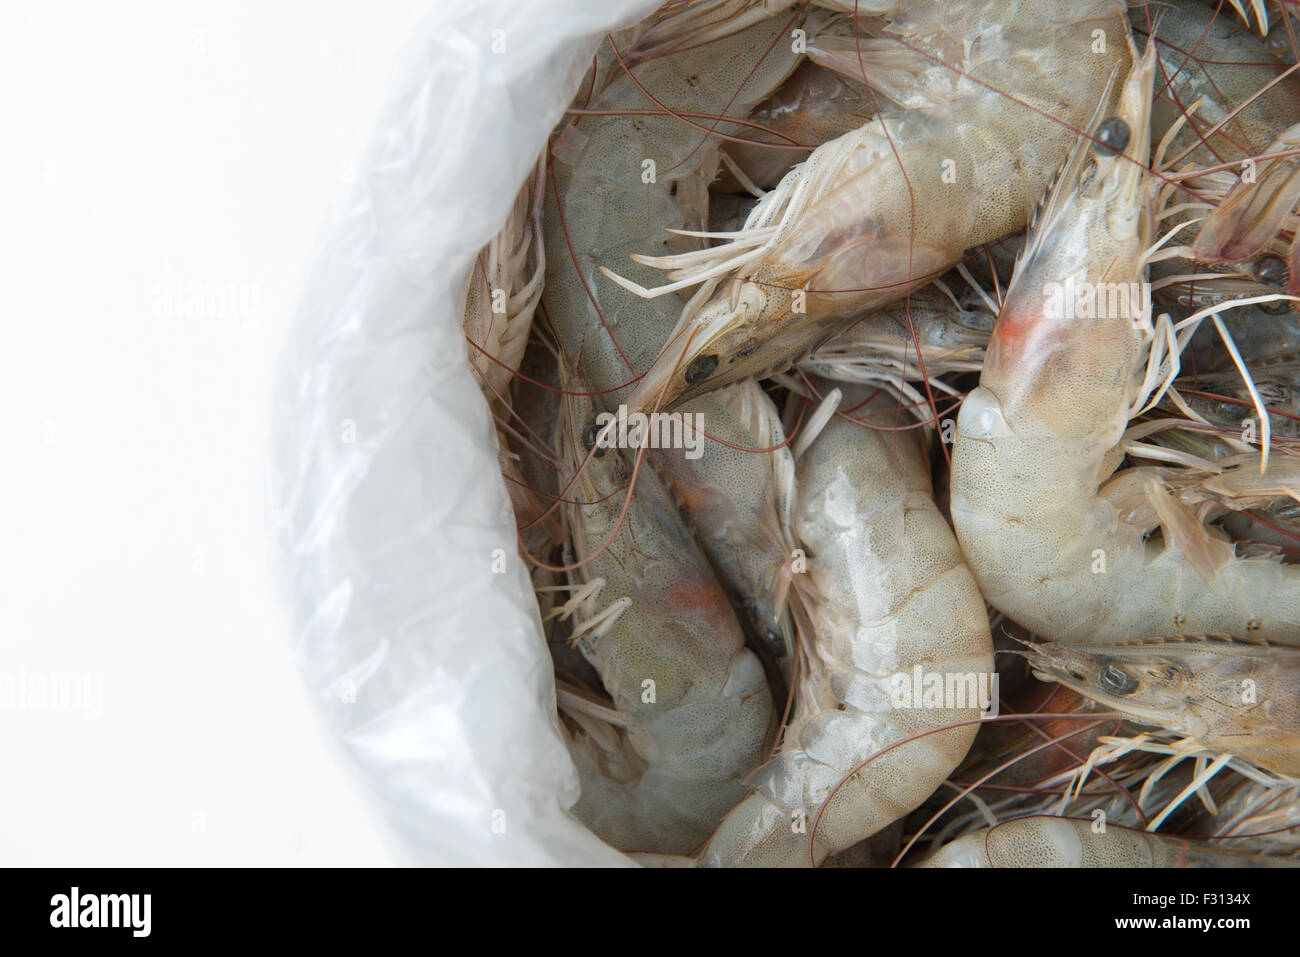 Download Shrimp In Plastic Bag Stock Photo Alamy Yellowimages Mockups